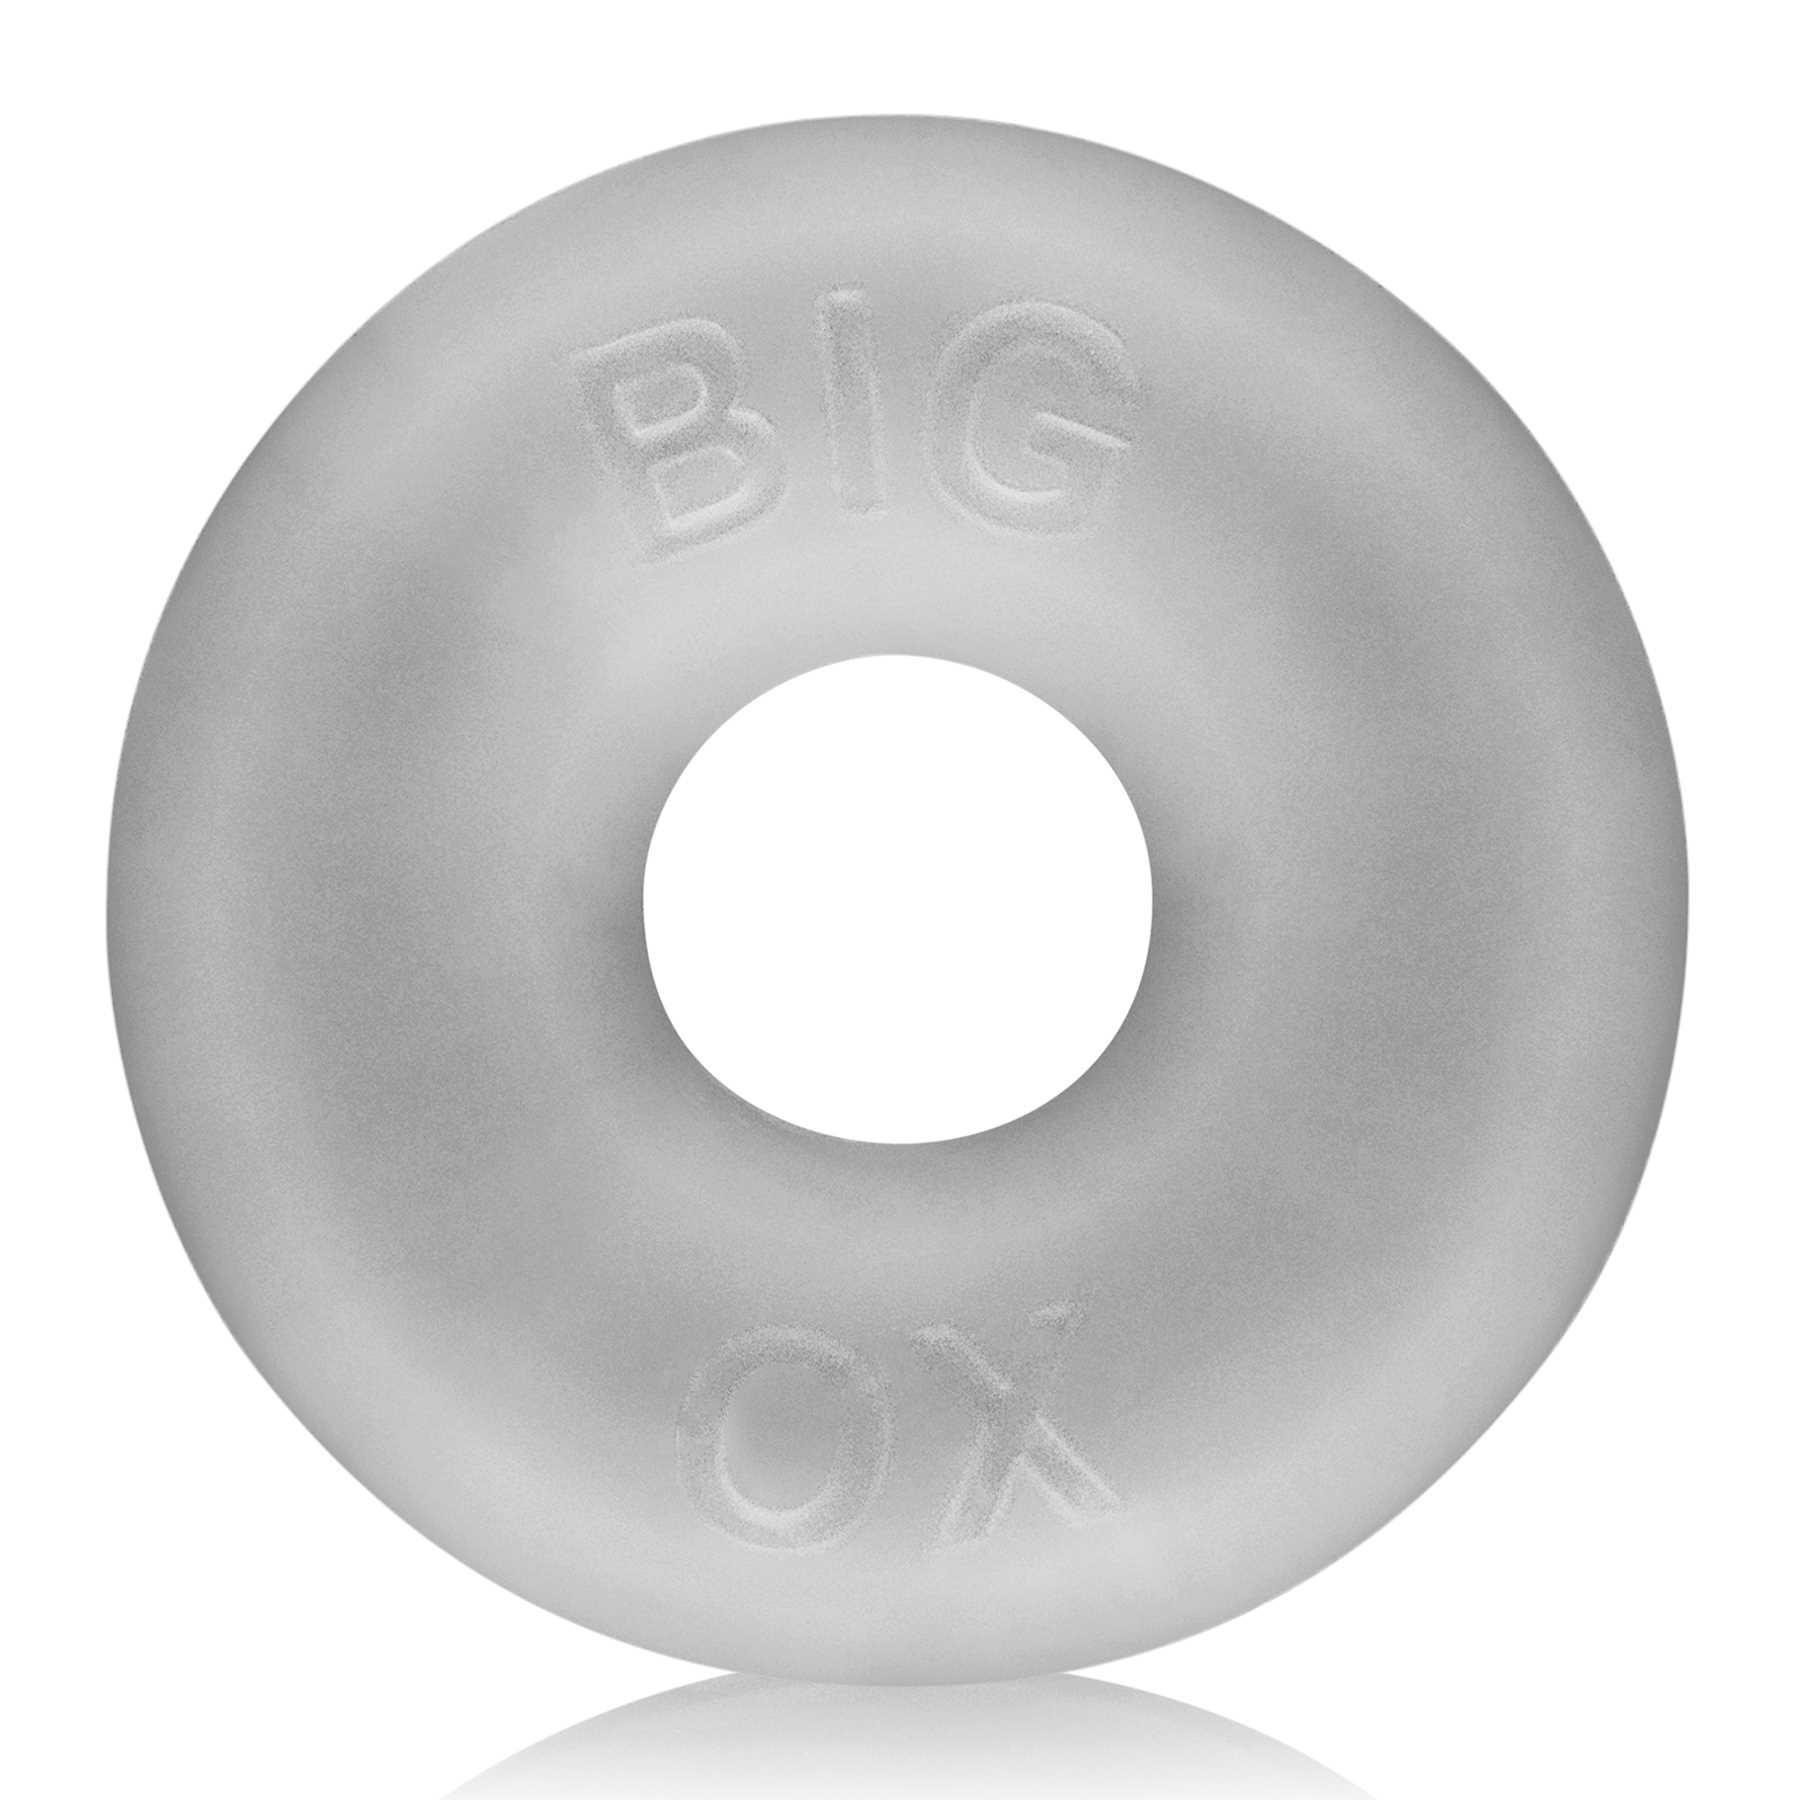 Big Ox Cockring product image 1